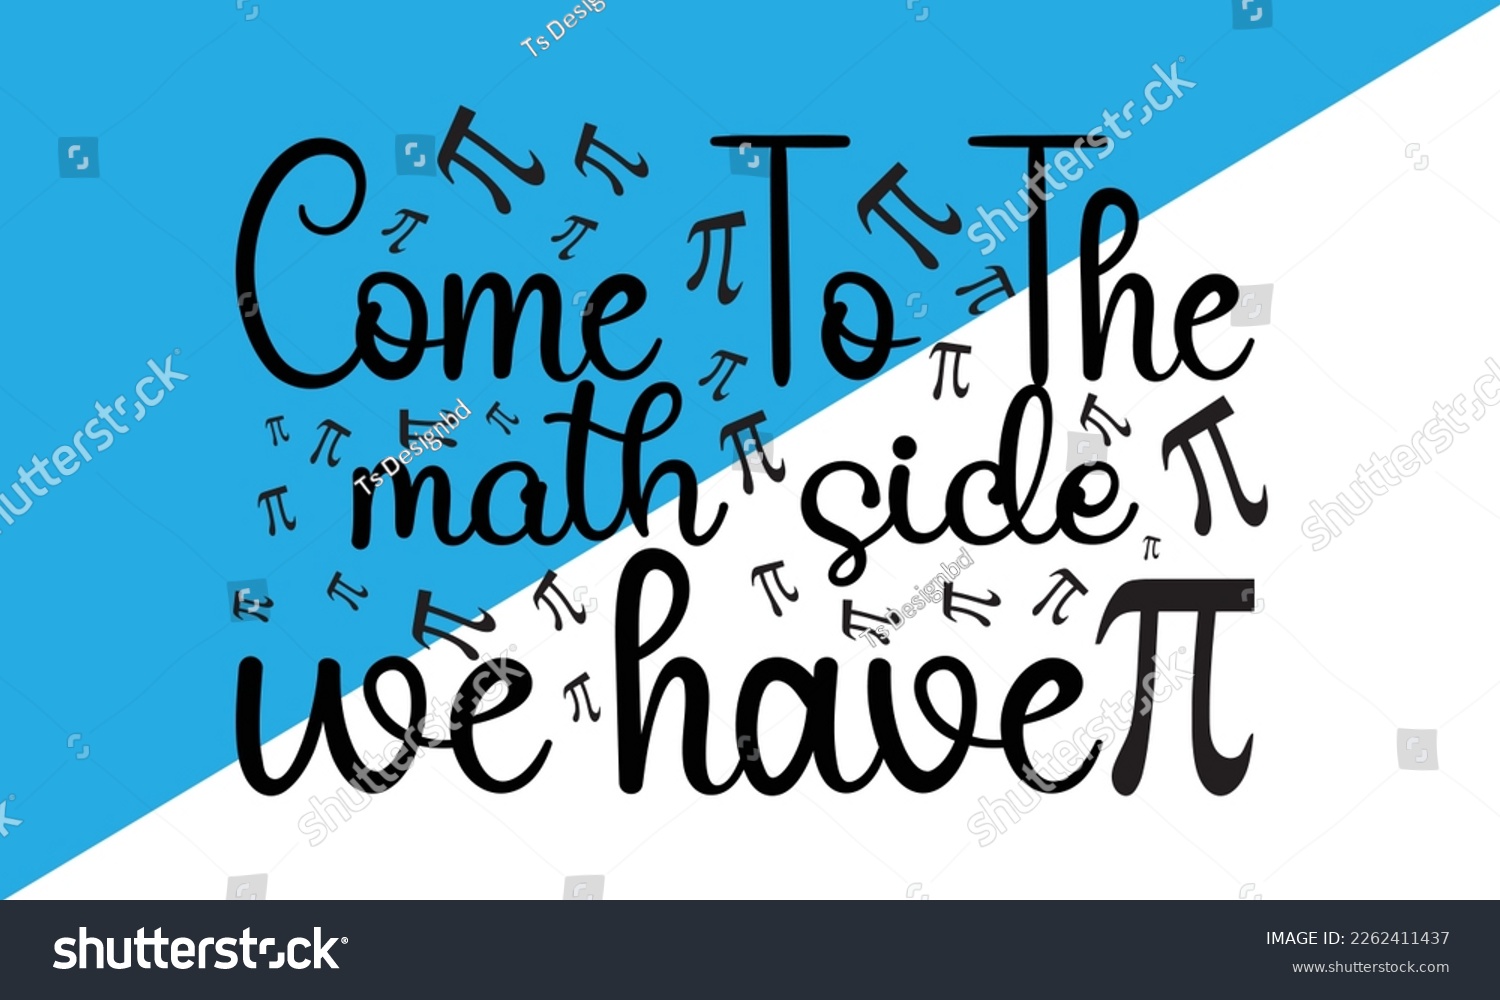 SVG of Pi Day svg Design, Math Teachers svg, Math,Typography design for Pi day, math teacher gift,  svg